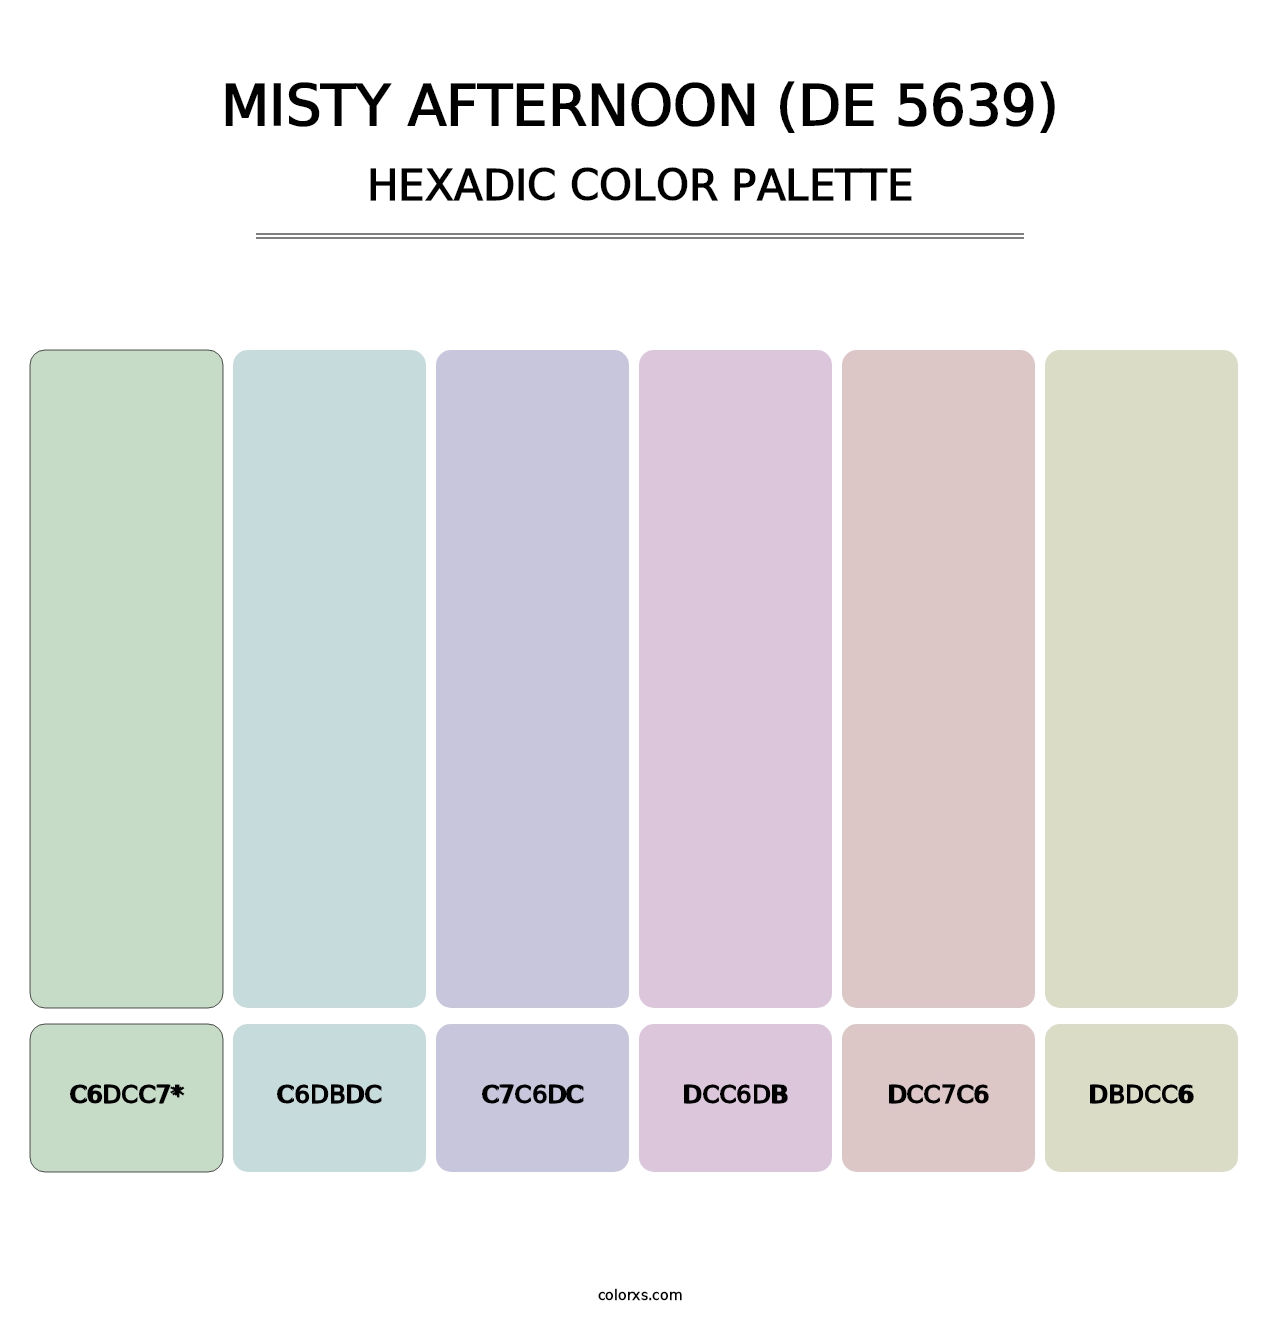 Misty Afternoon (DE 5639) - Hexadic Color Palette